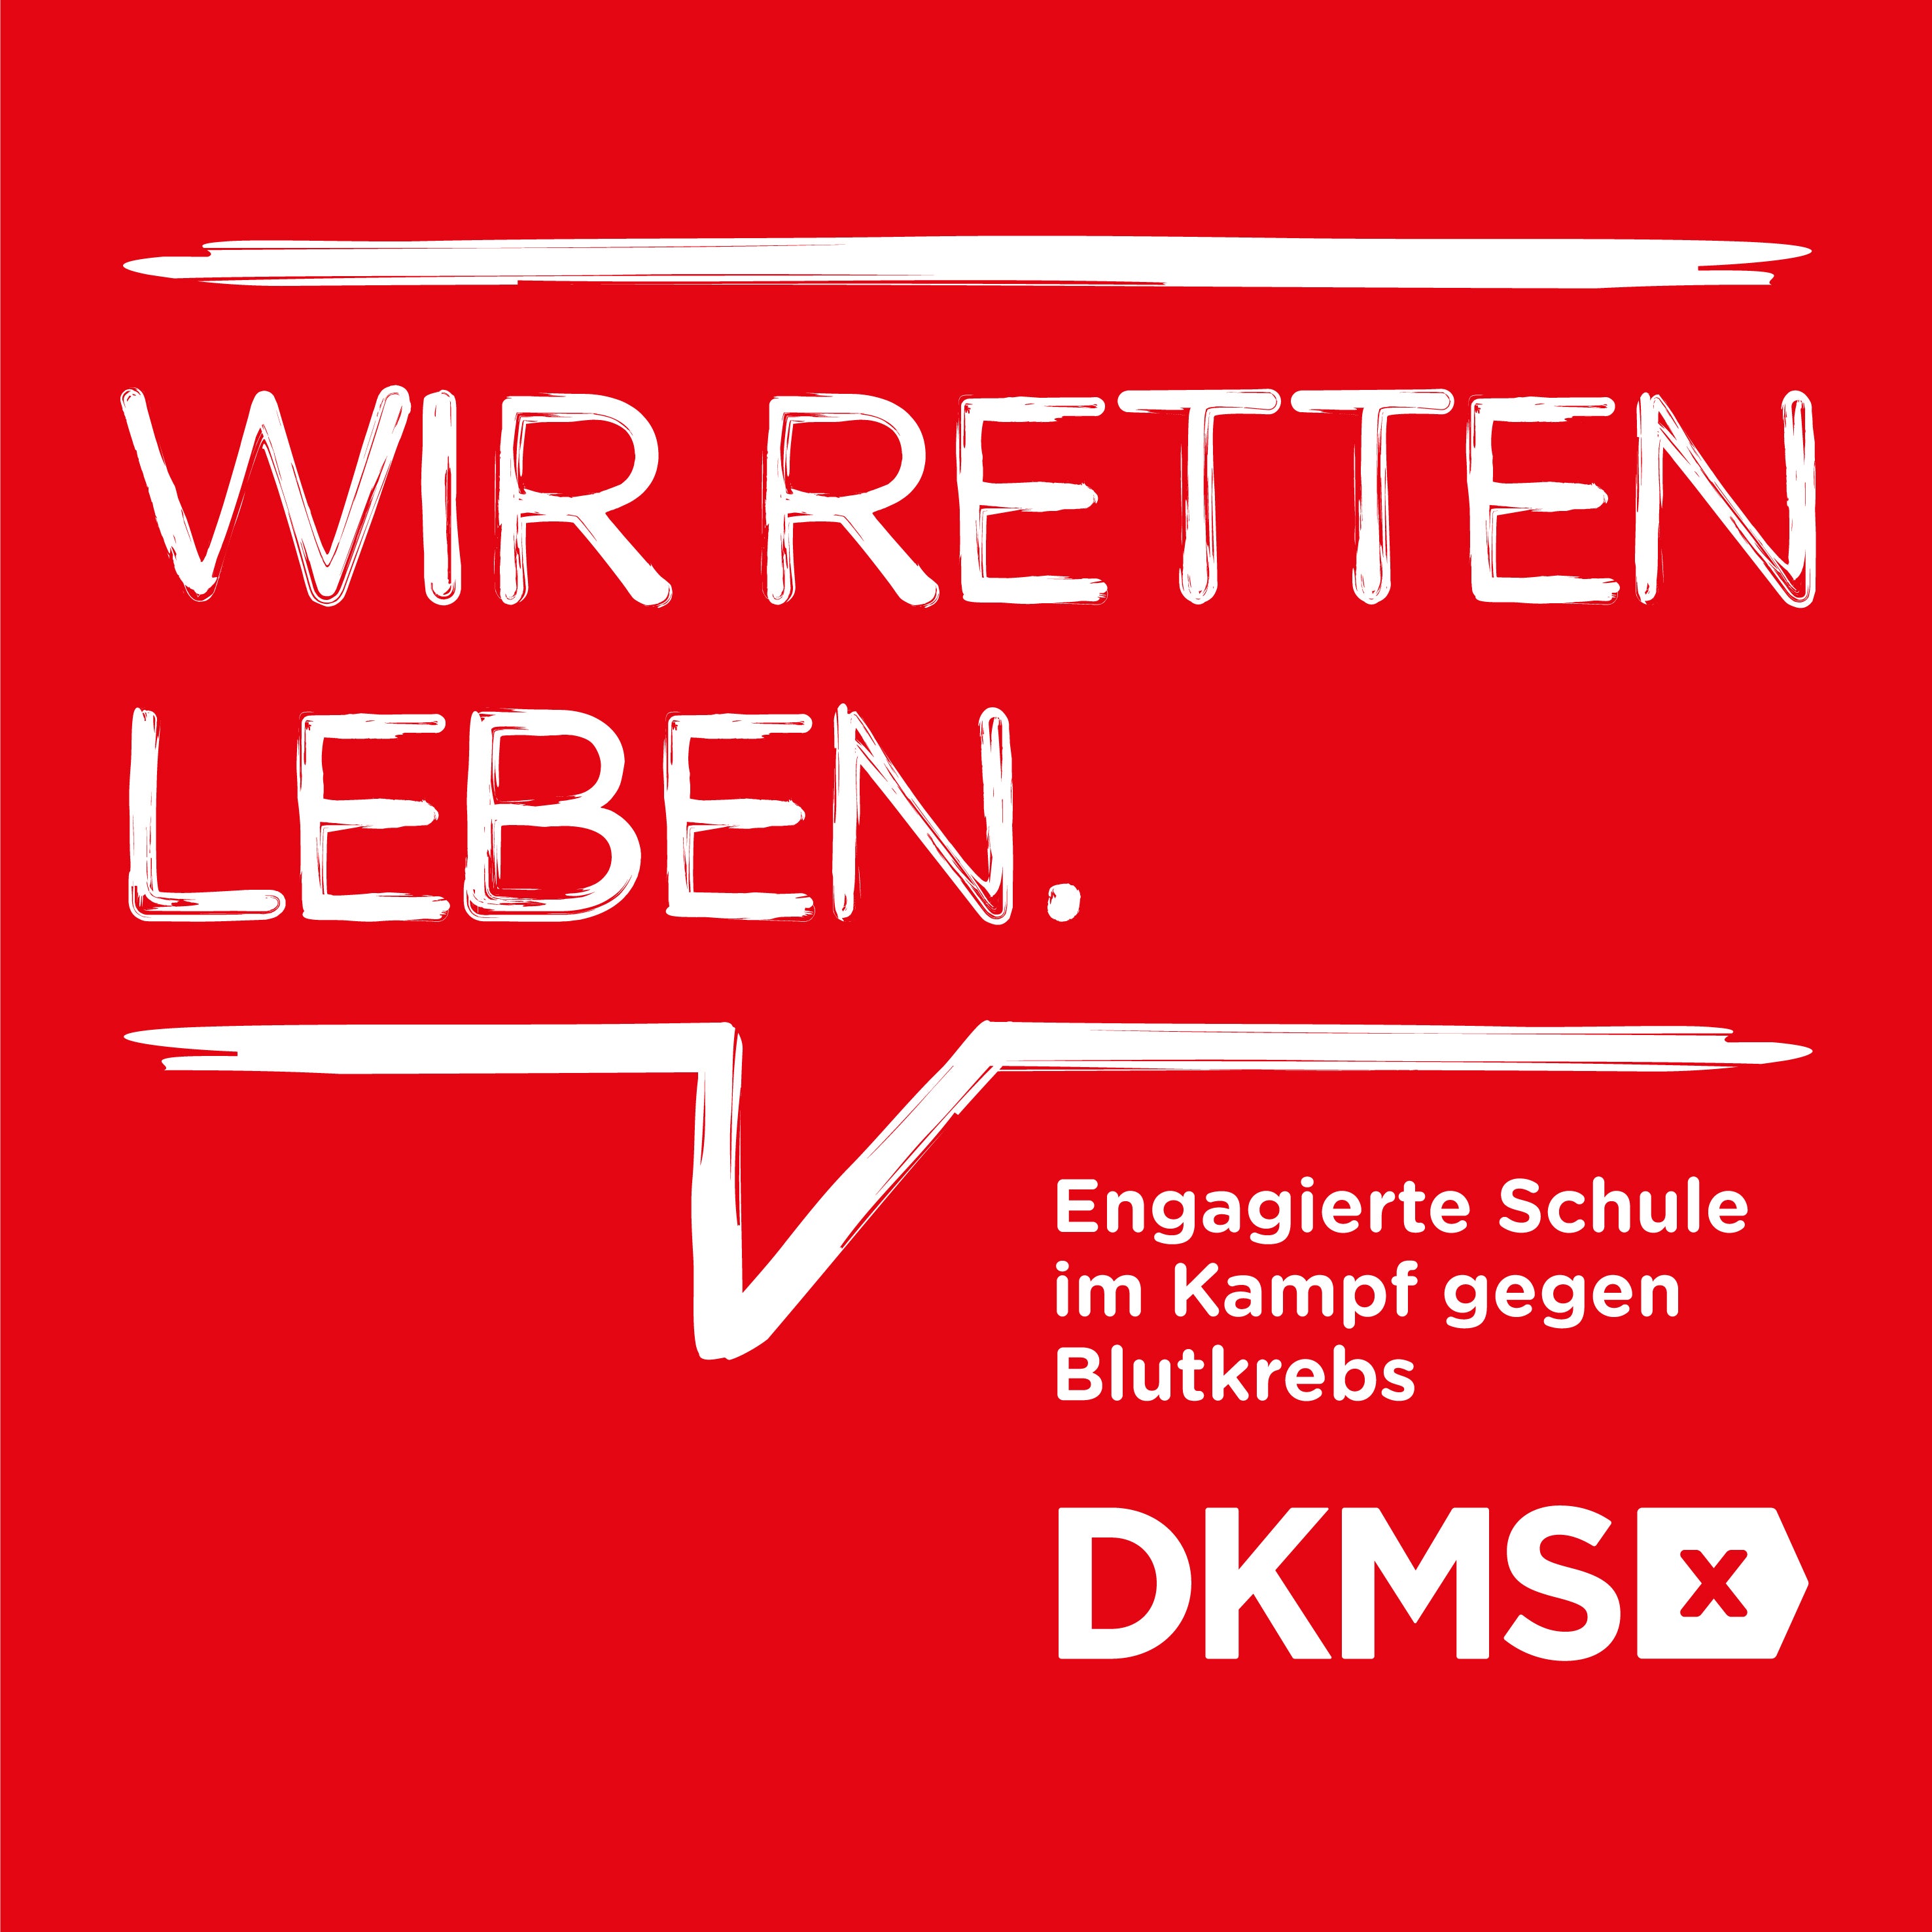 DKMS_Lebensretterschule_Schild_250x250mm_RGB_RZ_copy.jpg